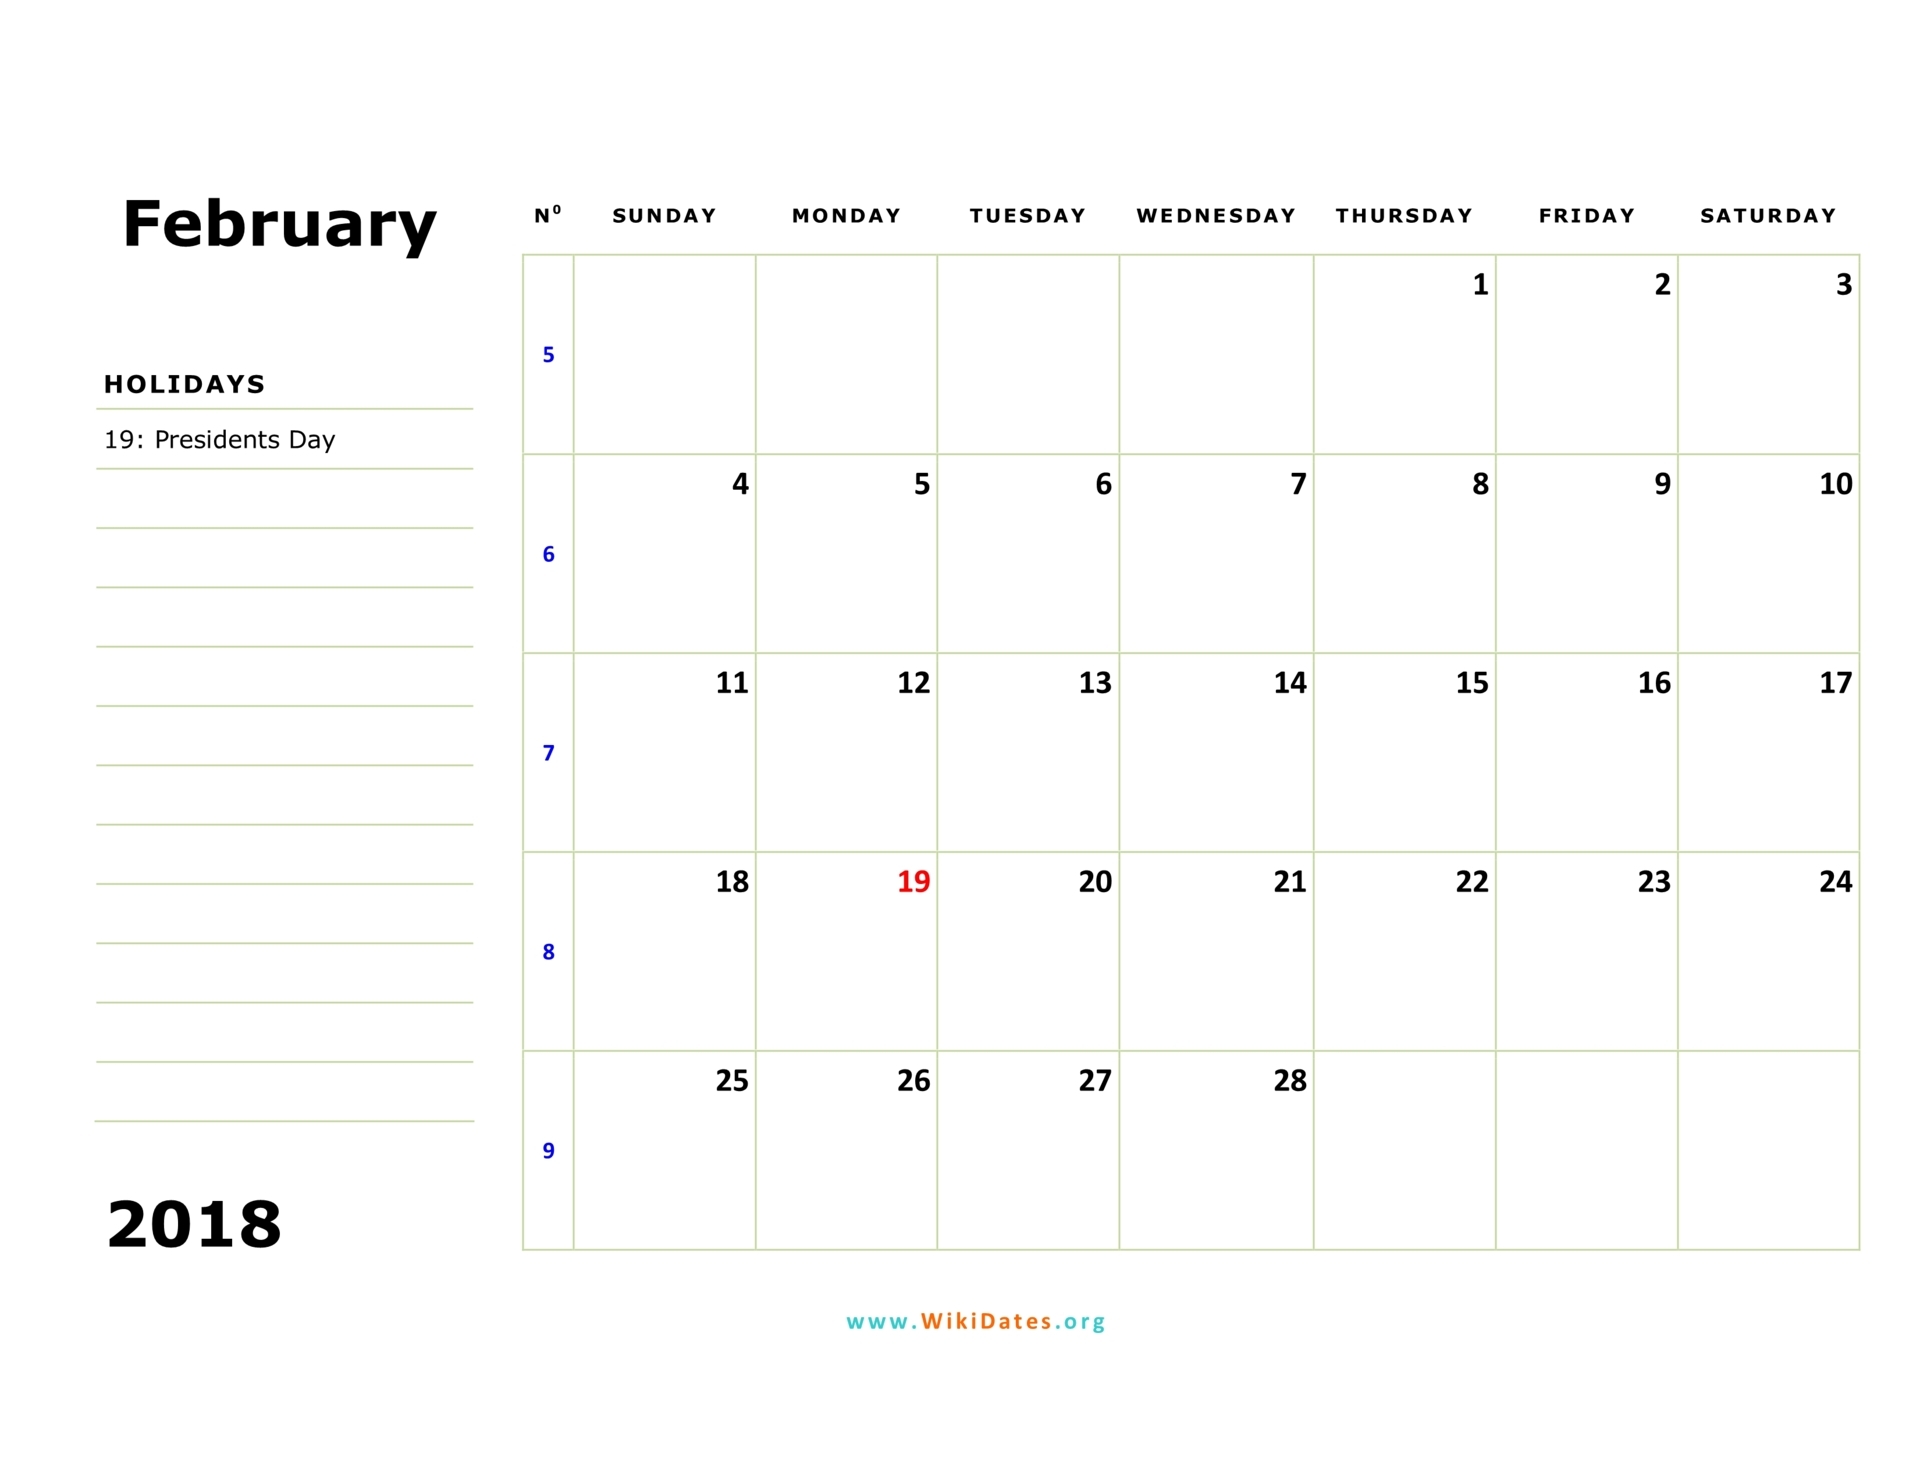 february-2018-calendar-maxcalendars-pinterest-february-holiday